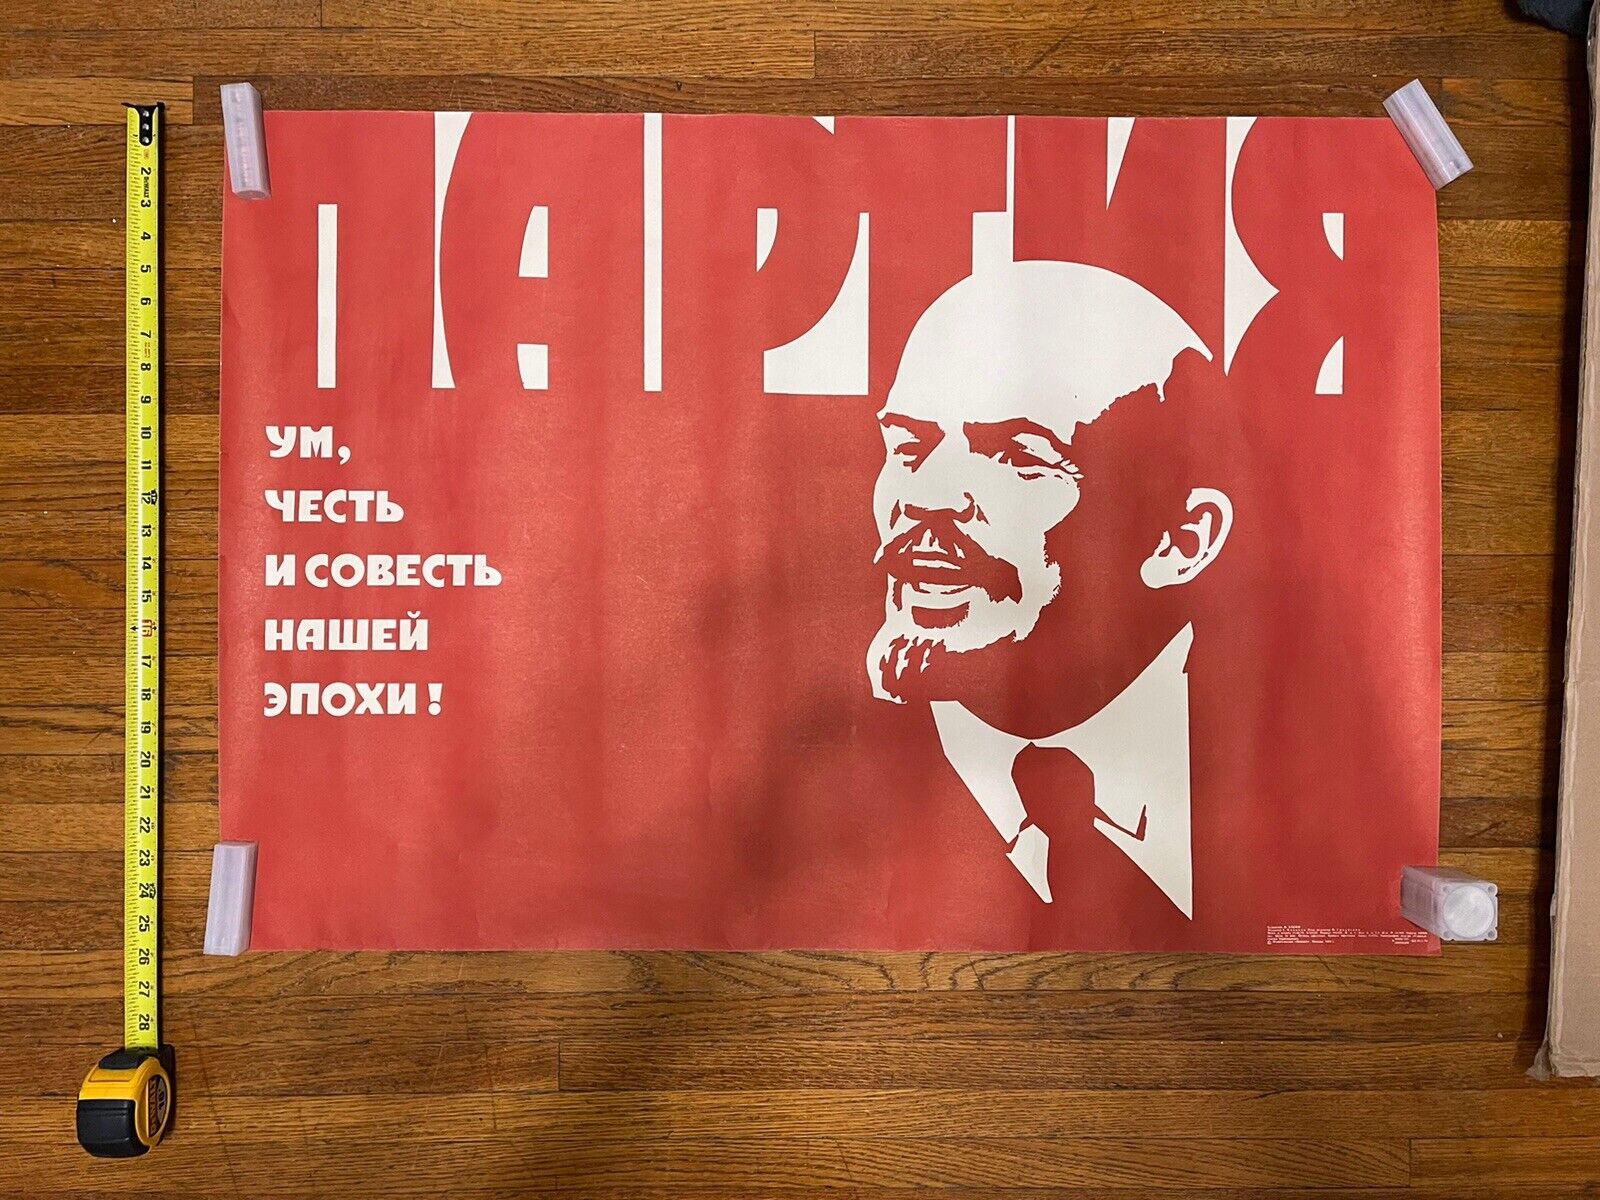 Poster Soviet  propaganda Communism - Glory to Lenin, 1979, USSR, Original Large